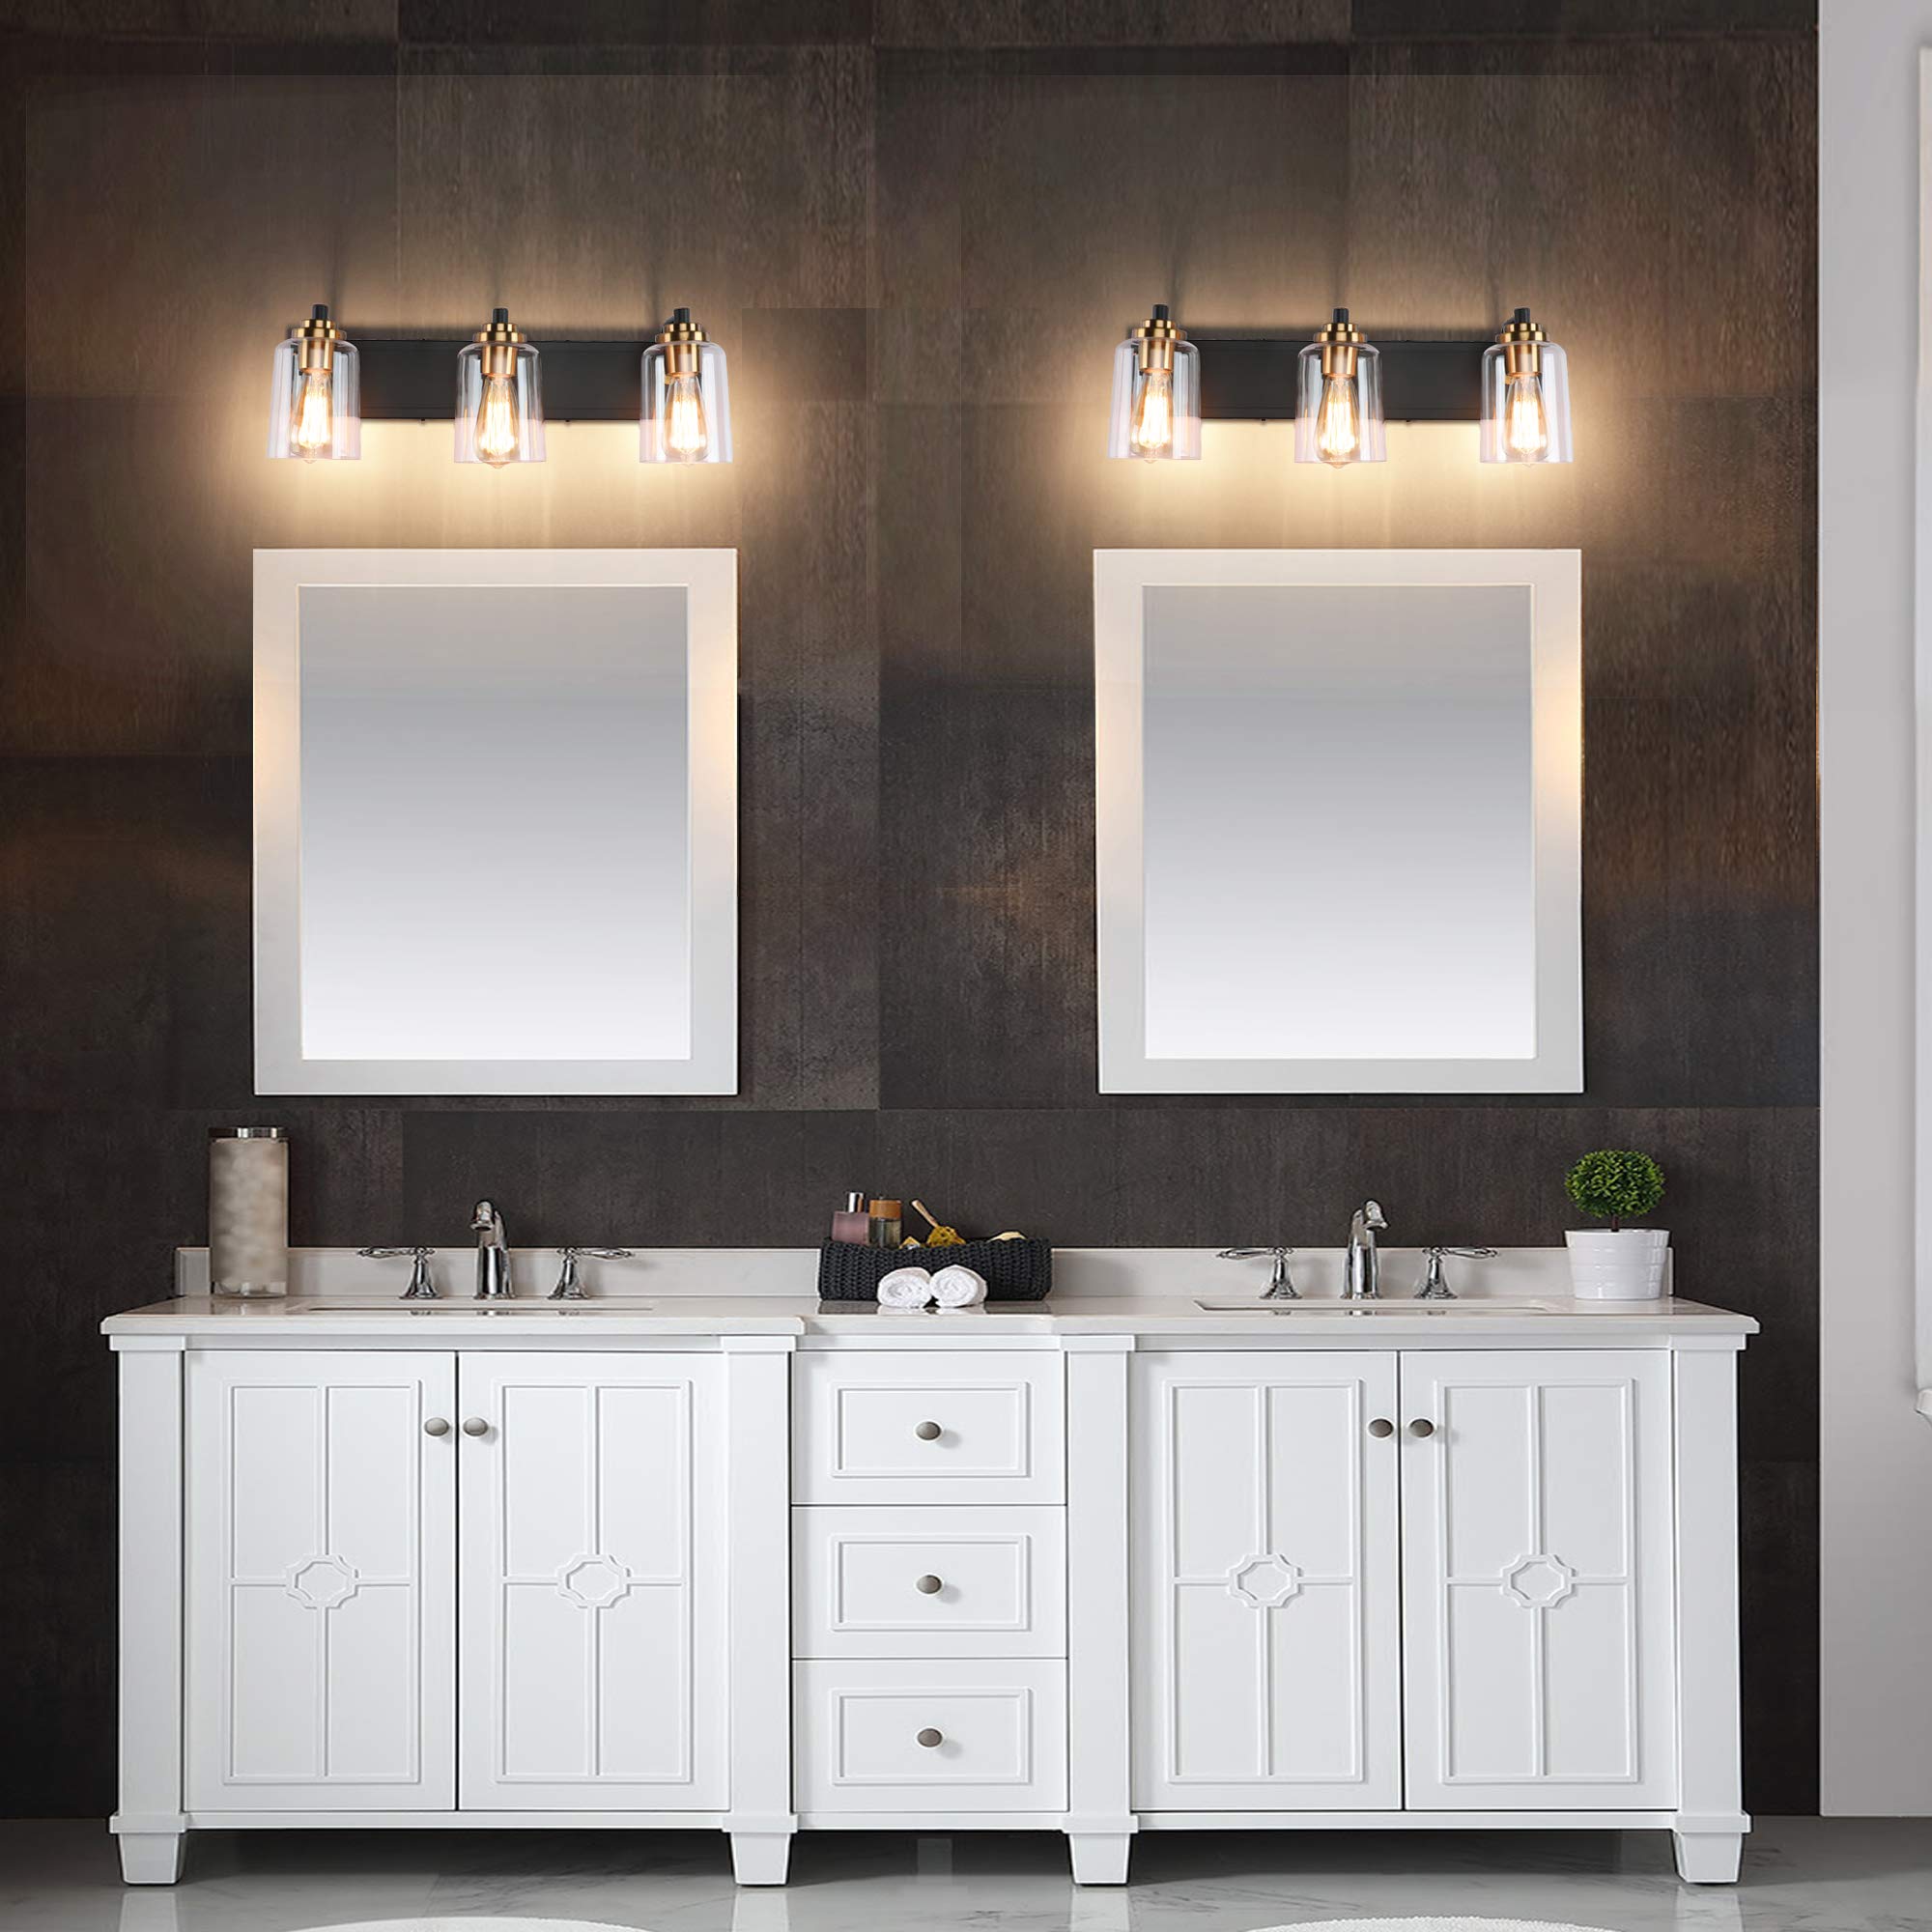 SOLFART Bathroom Vanity Light,3-Light Bathroom Lights Over Mirror in Black Bronze Wall Sconces(Bronze, 3-Light)